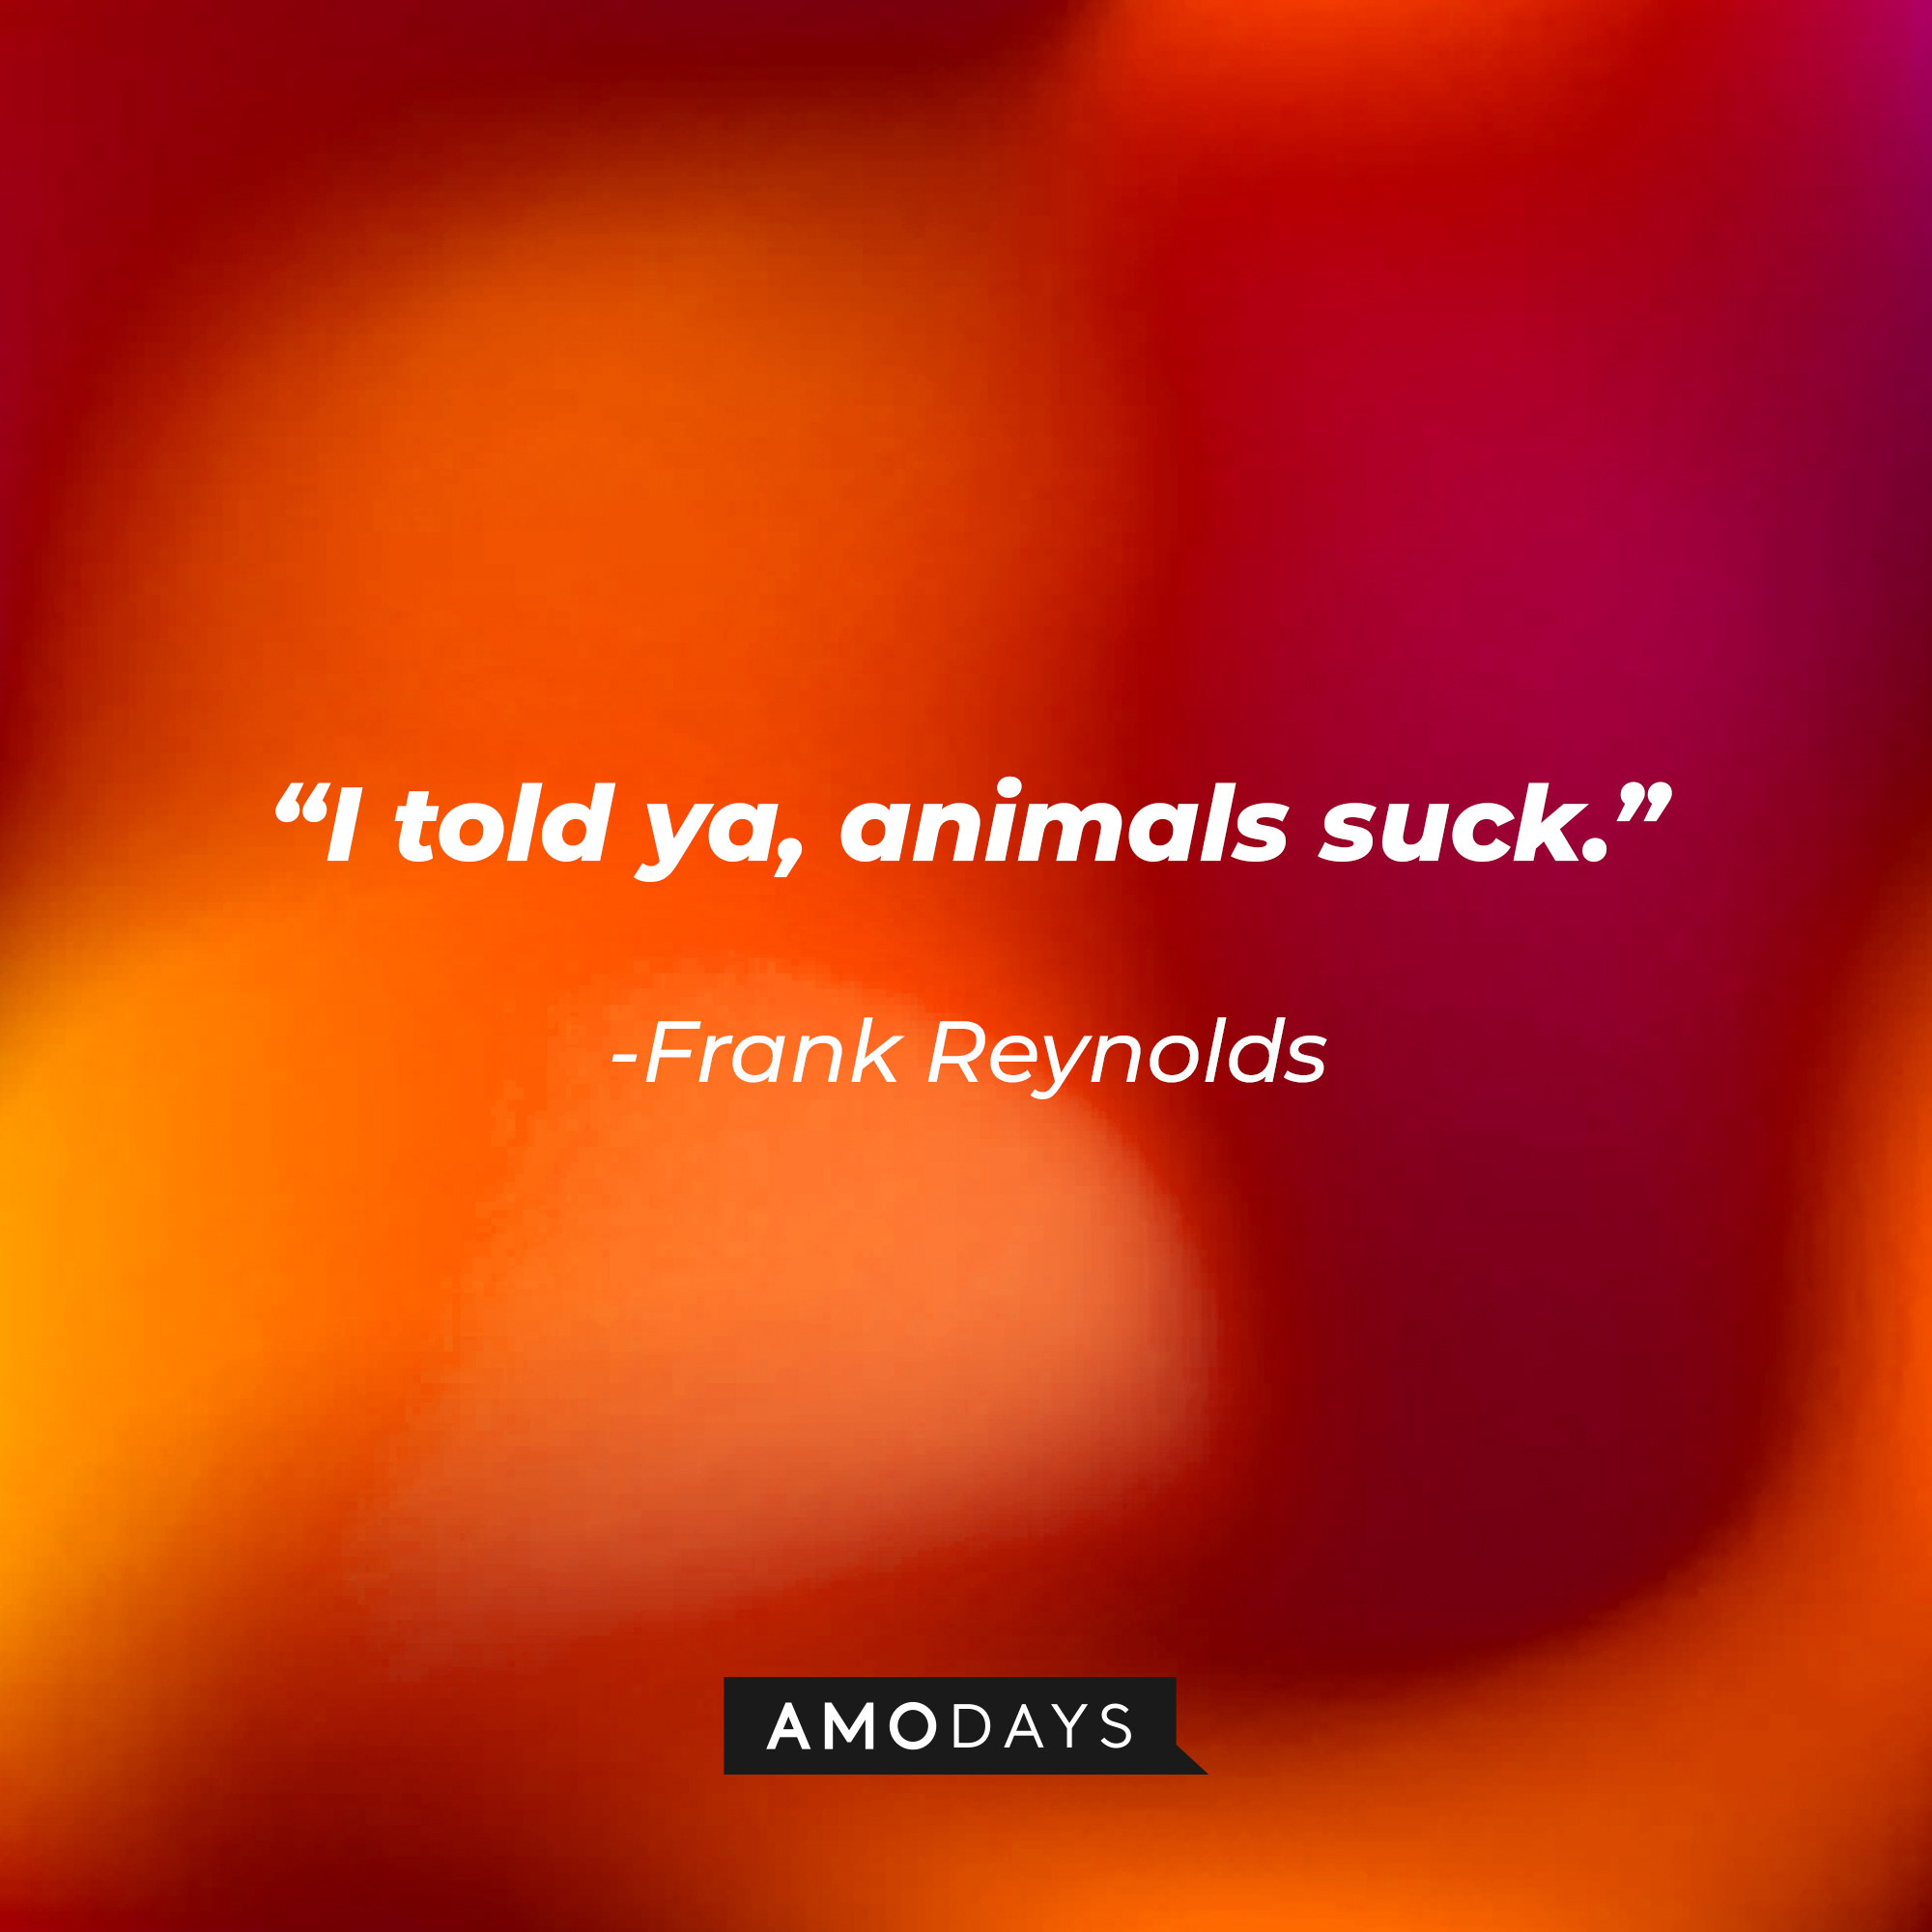 Frank Reynolds quote: “I told ya, animals suck.” | Source: facebook.com/alwayssunny